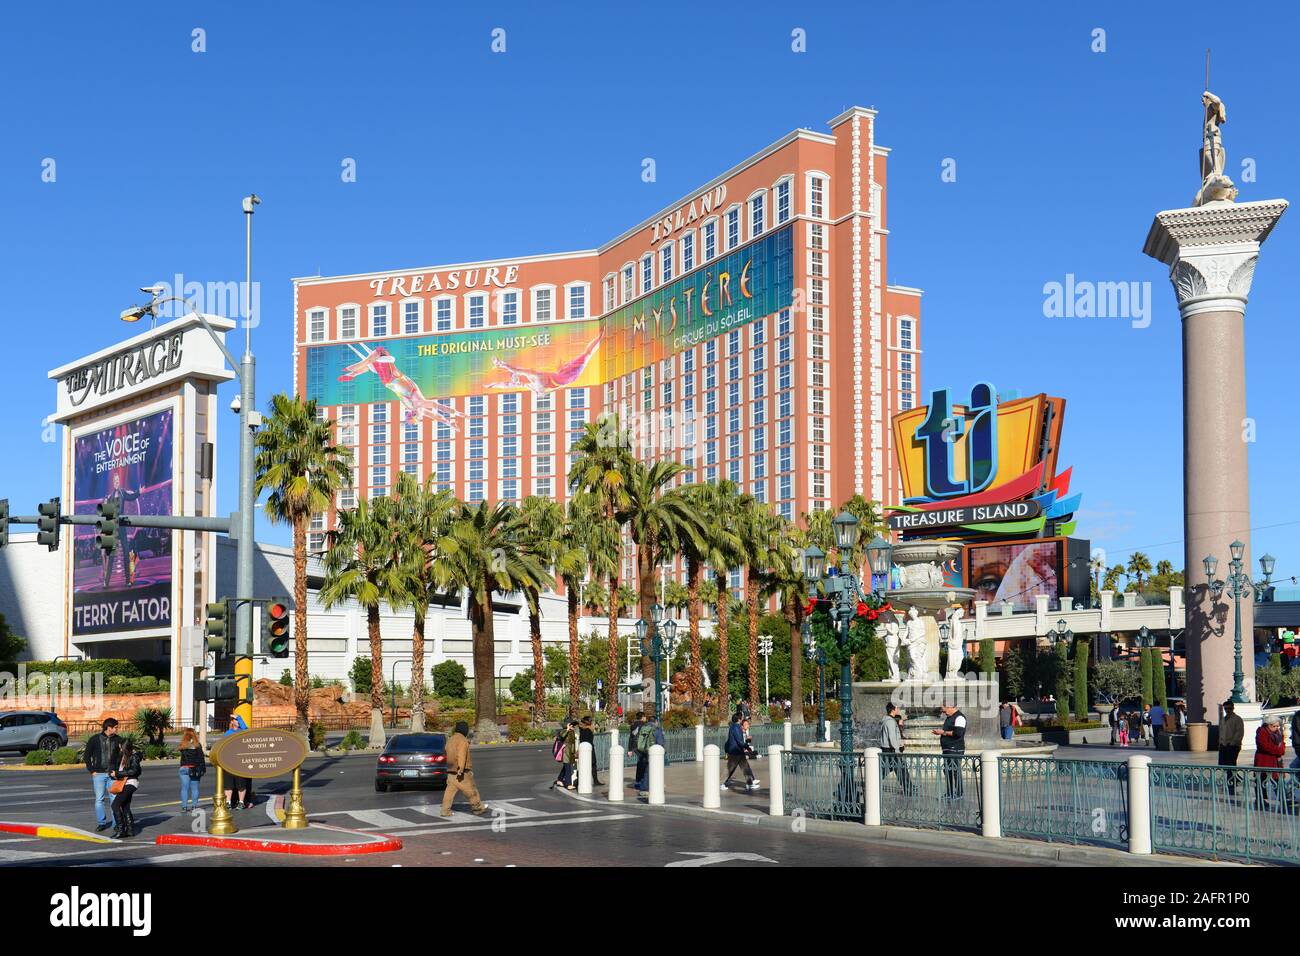 Treasure Island is a luxury resort and casino on Las Vegas Strip in Las Vegas, Nevada, USA. The hotel has Caribbean Pirates theme. Stock Photo